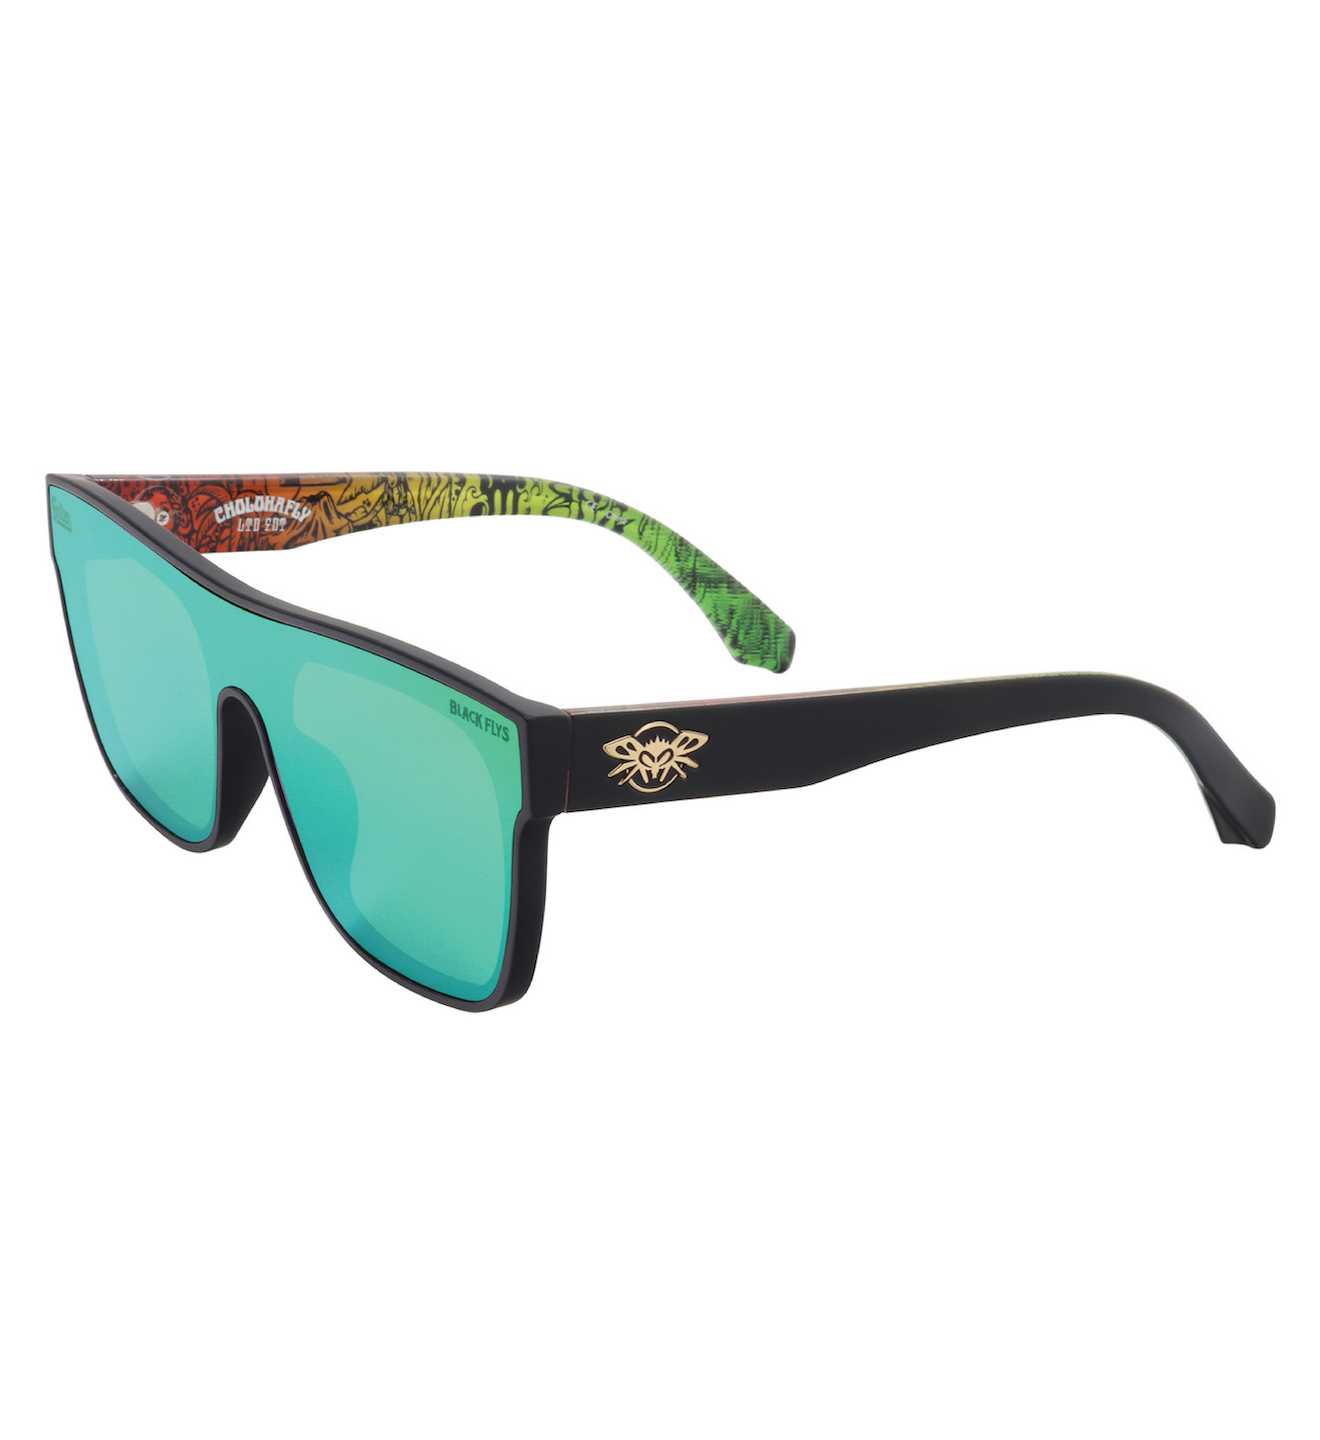 Cholohaflys Sunglasses - Shiny Black/Green